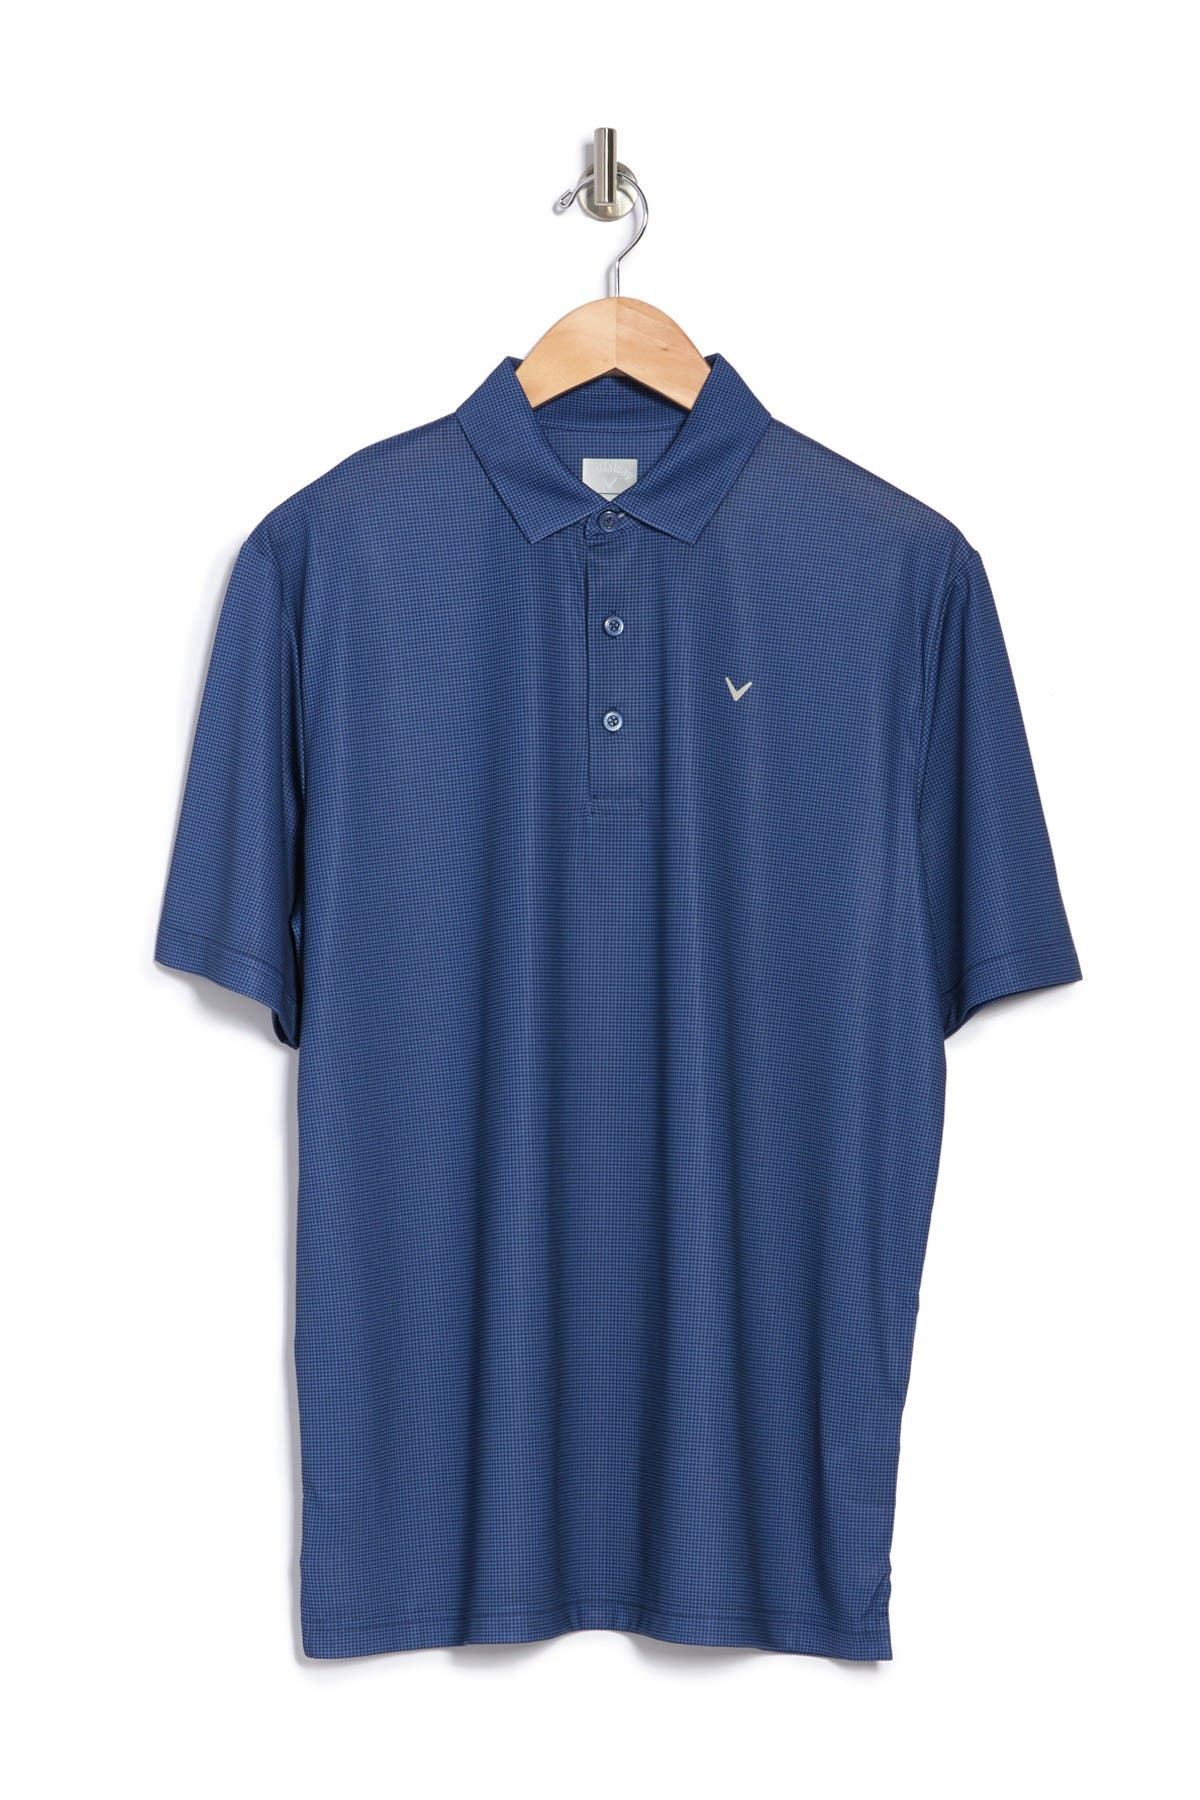 Callaway Golf Gingham Print Golf Polo In Gray Blue | ModeSens